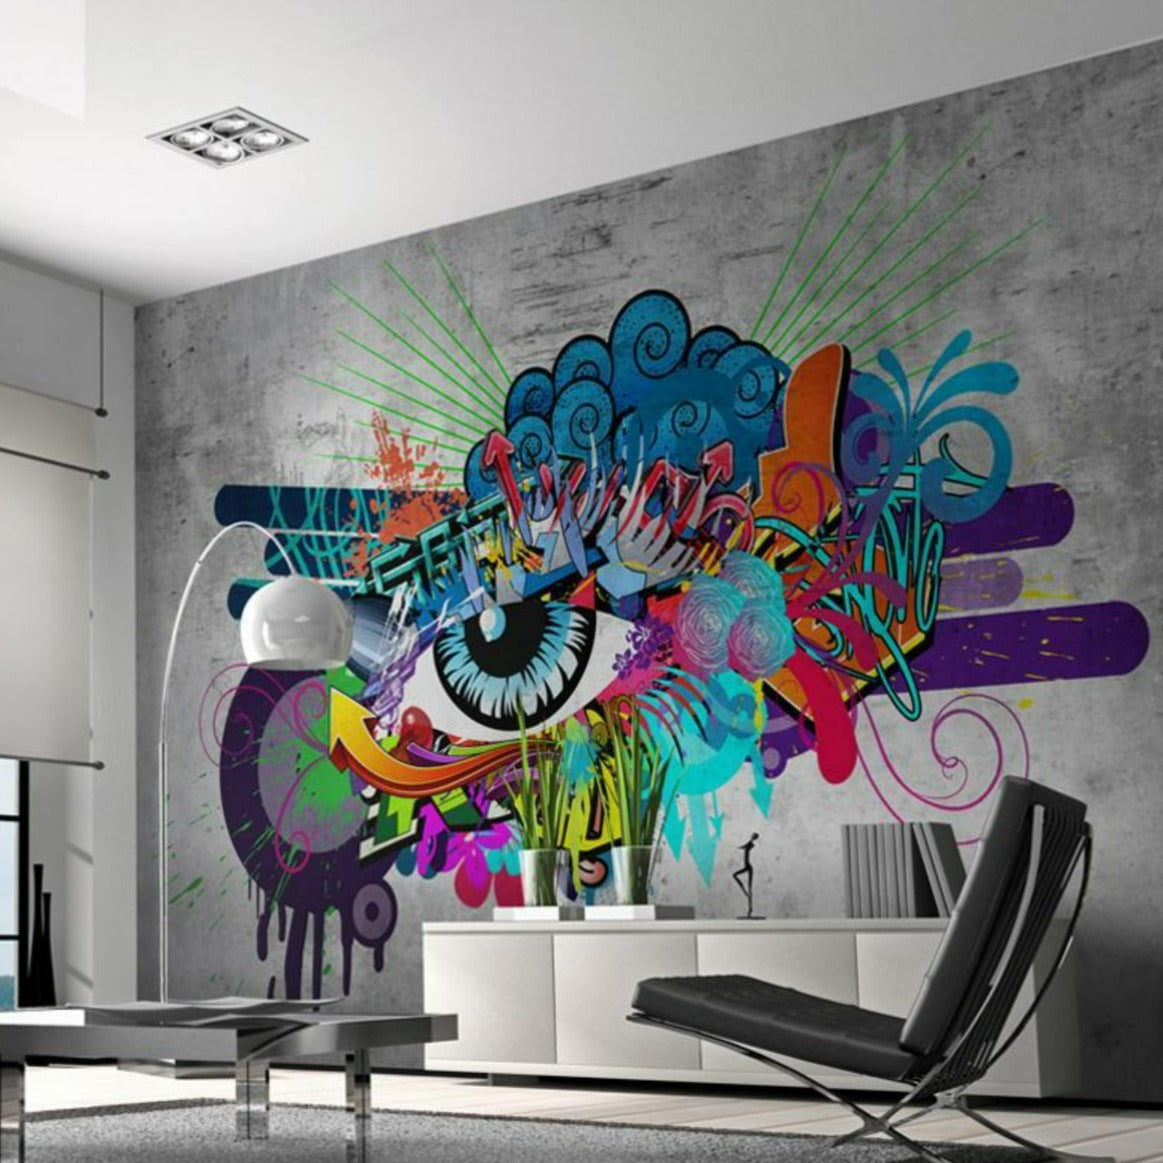 Peel and stick wall mural - Graffiti eye-TipTopHomeDecor